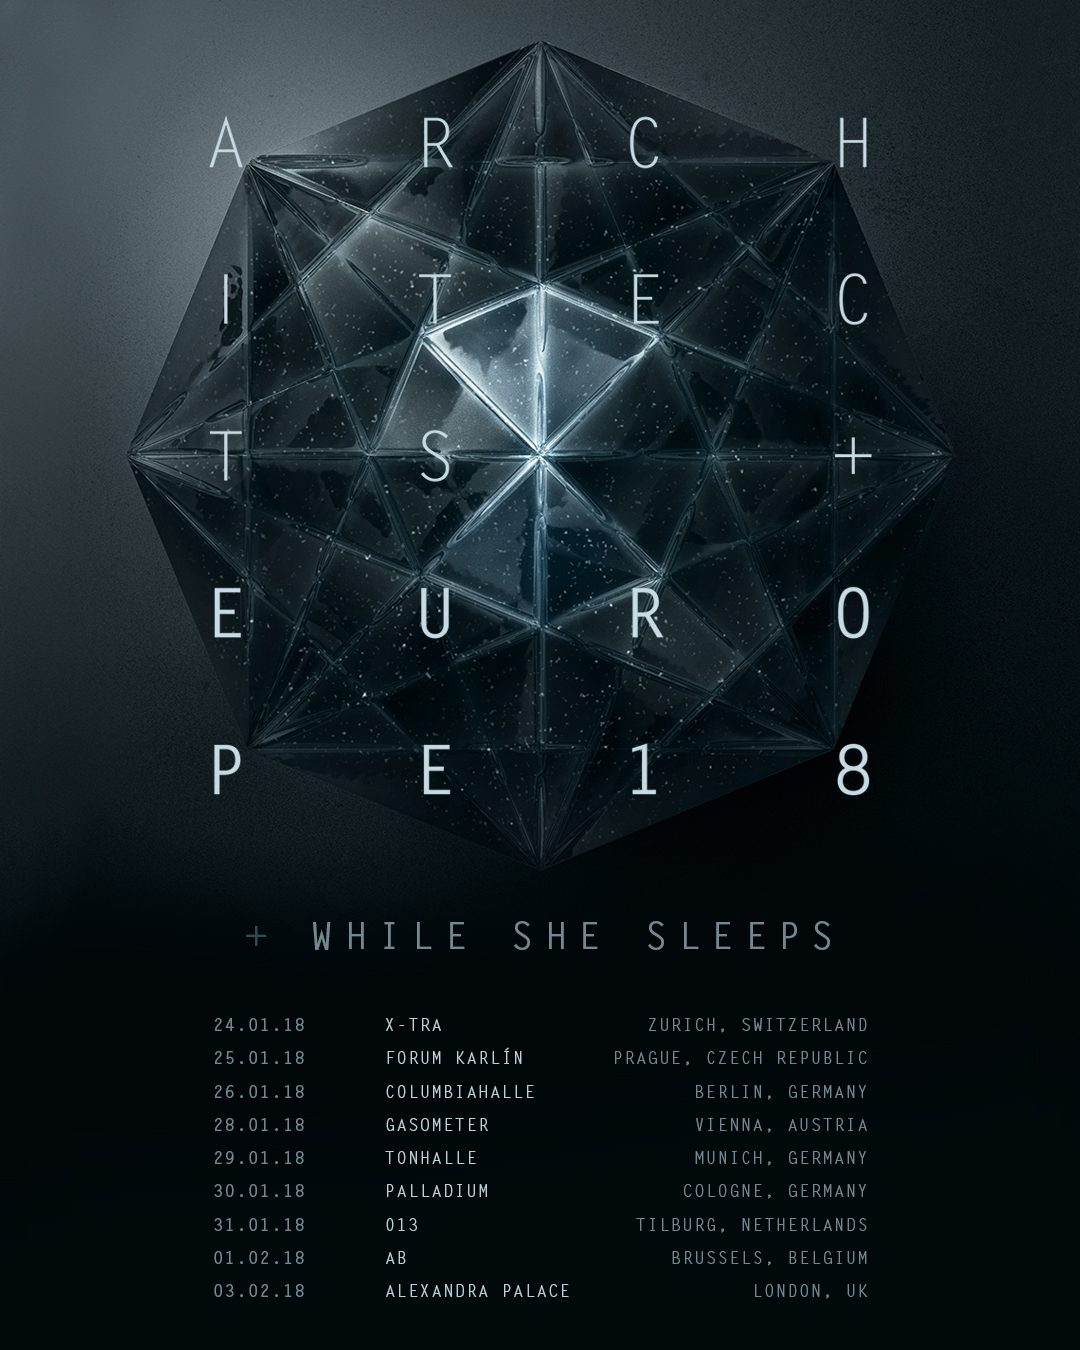 ARCHITECTS ANNOUNCE 2018 EUROPEAN TOUR